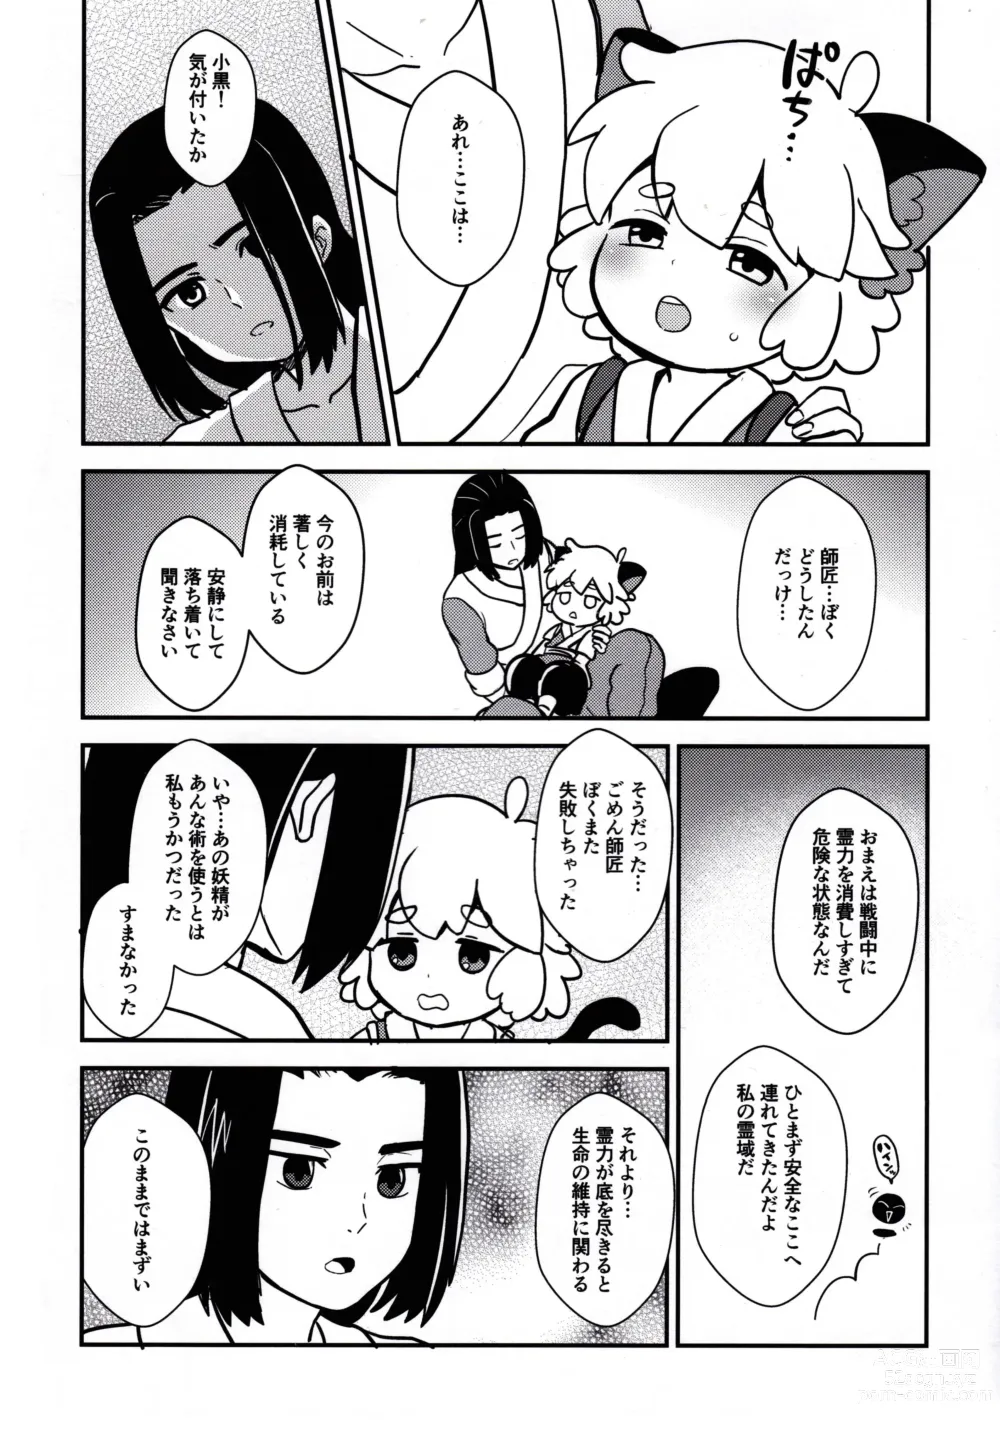 Page 2 of doujinshi Shinki-teki Chiryouhou